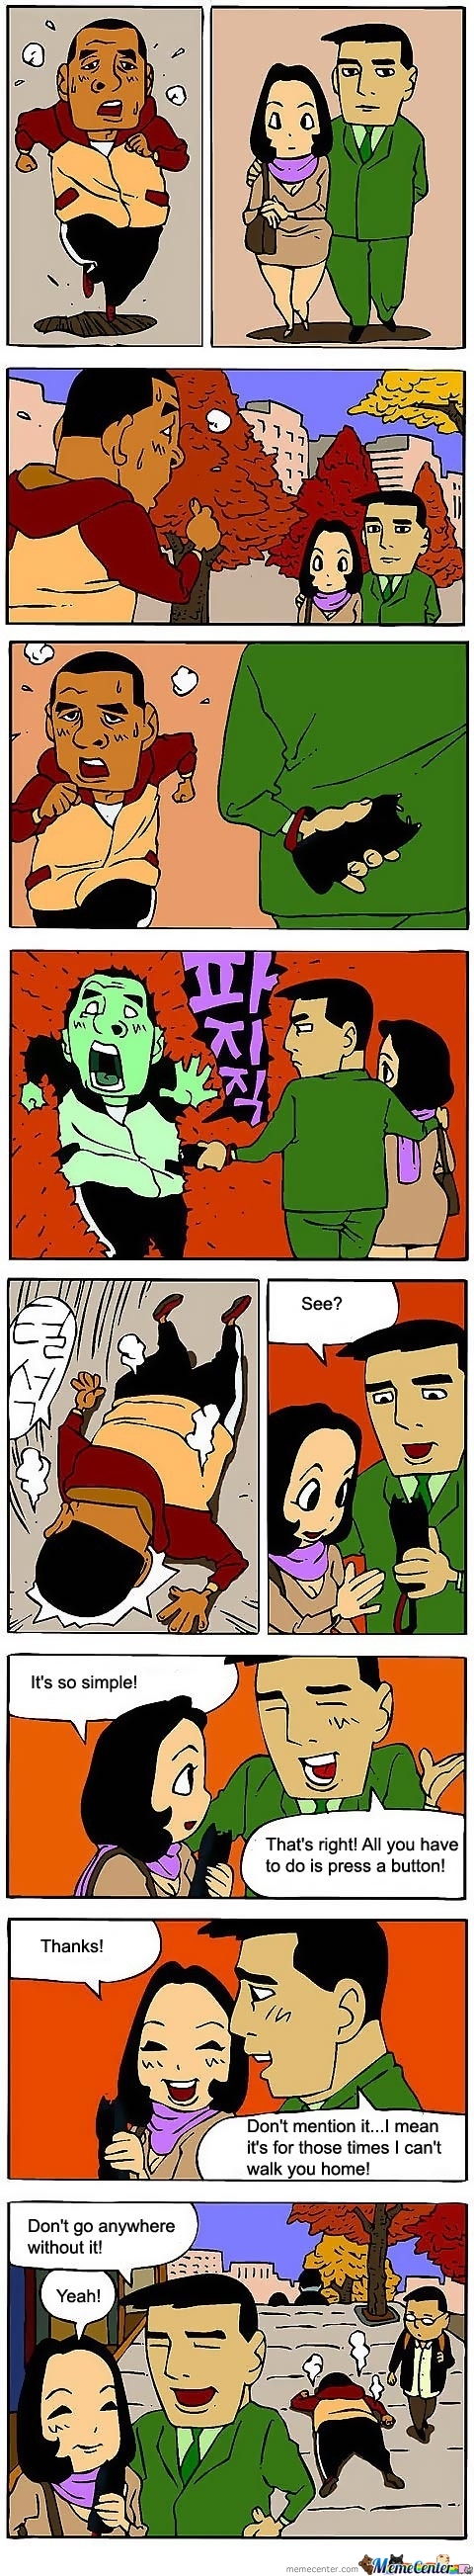 korean-comic-1_o_211547.jpg